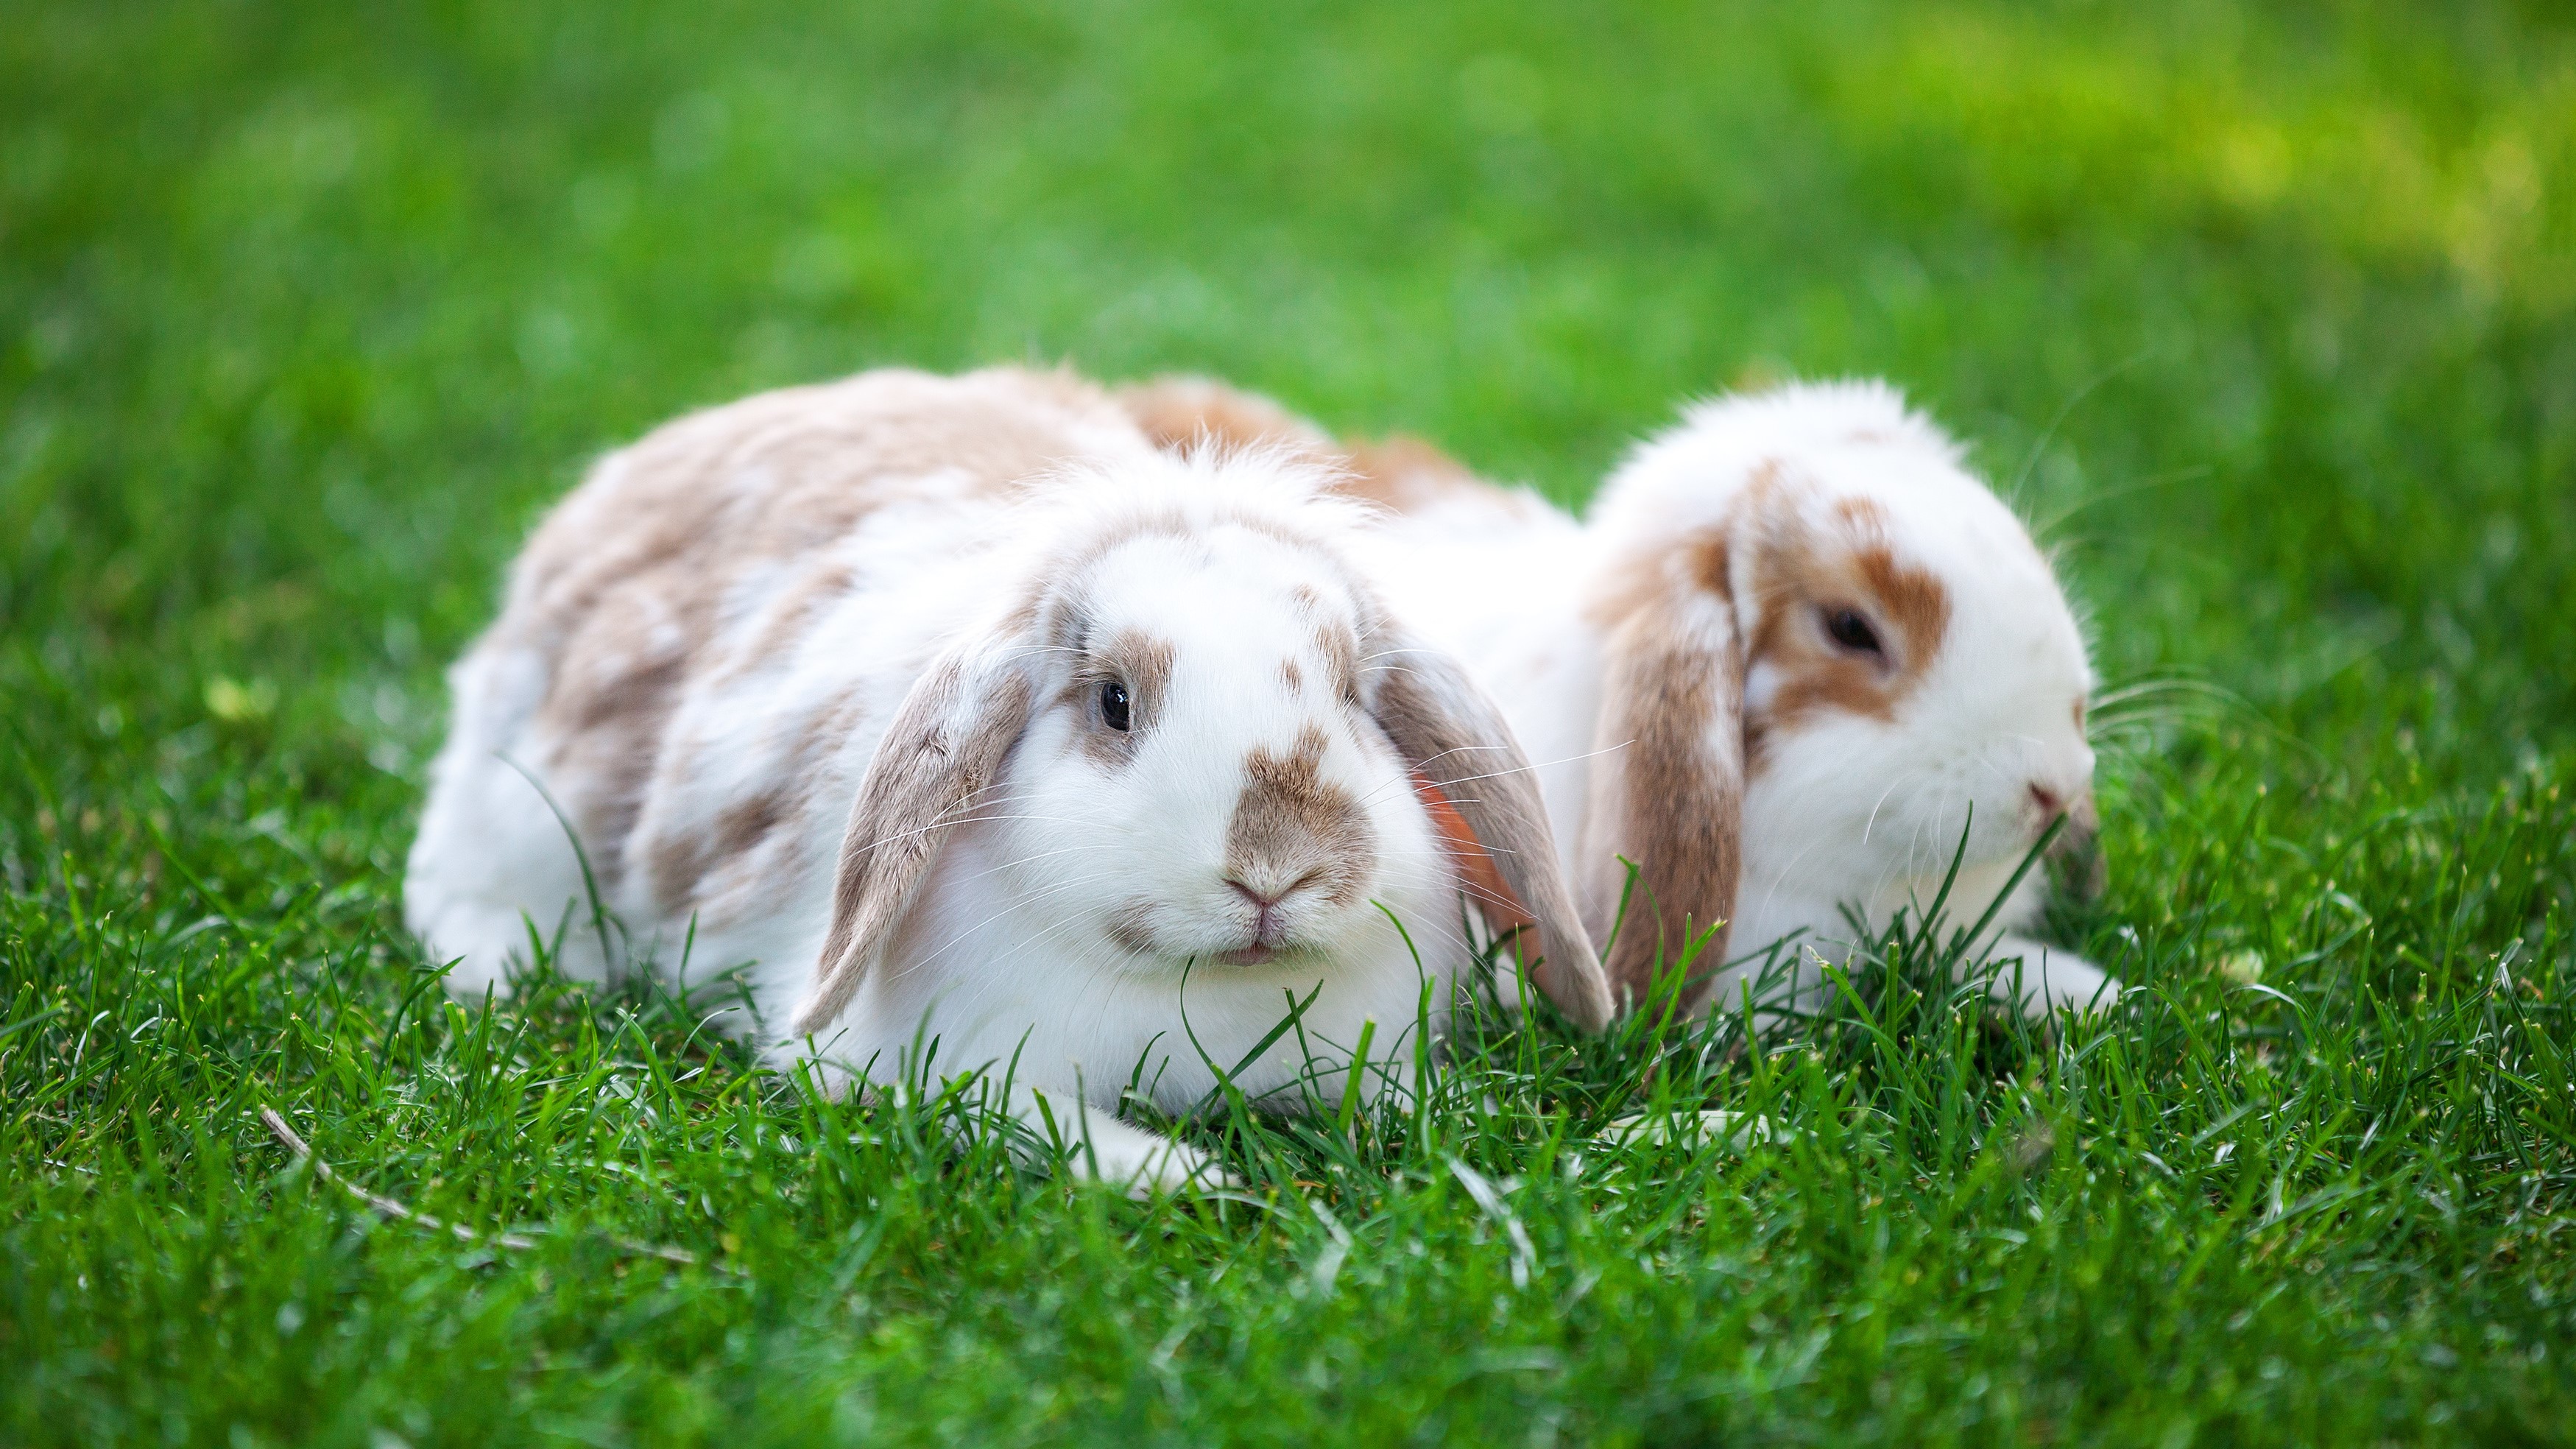 AdobeStock_99668764 - 2 rabbits on grass wide.jpeg